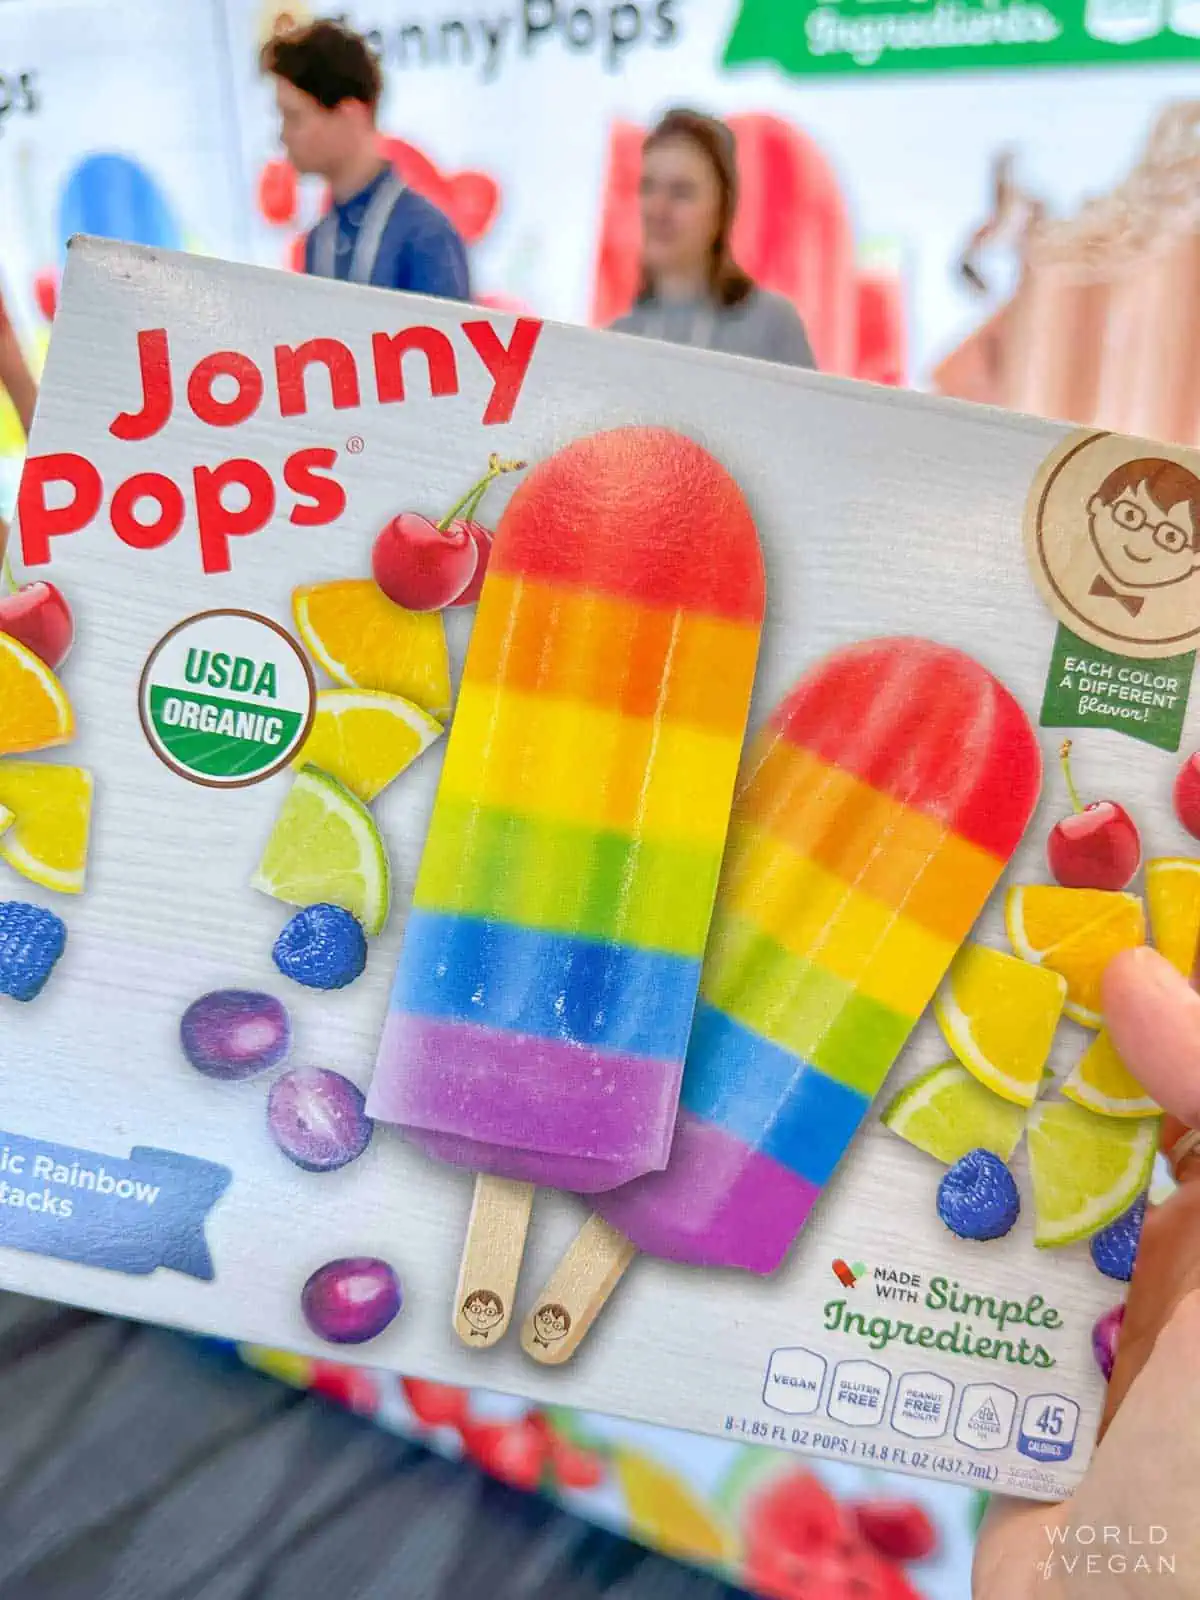 A package of Jonny Pops vegan rainbow popsicles.